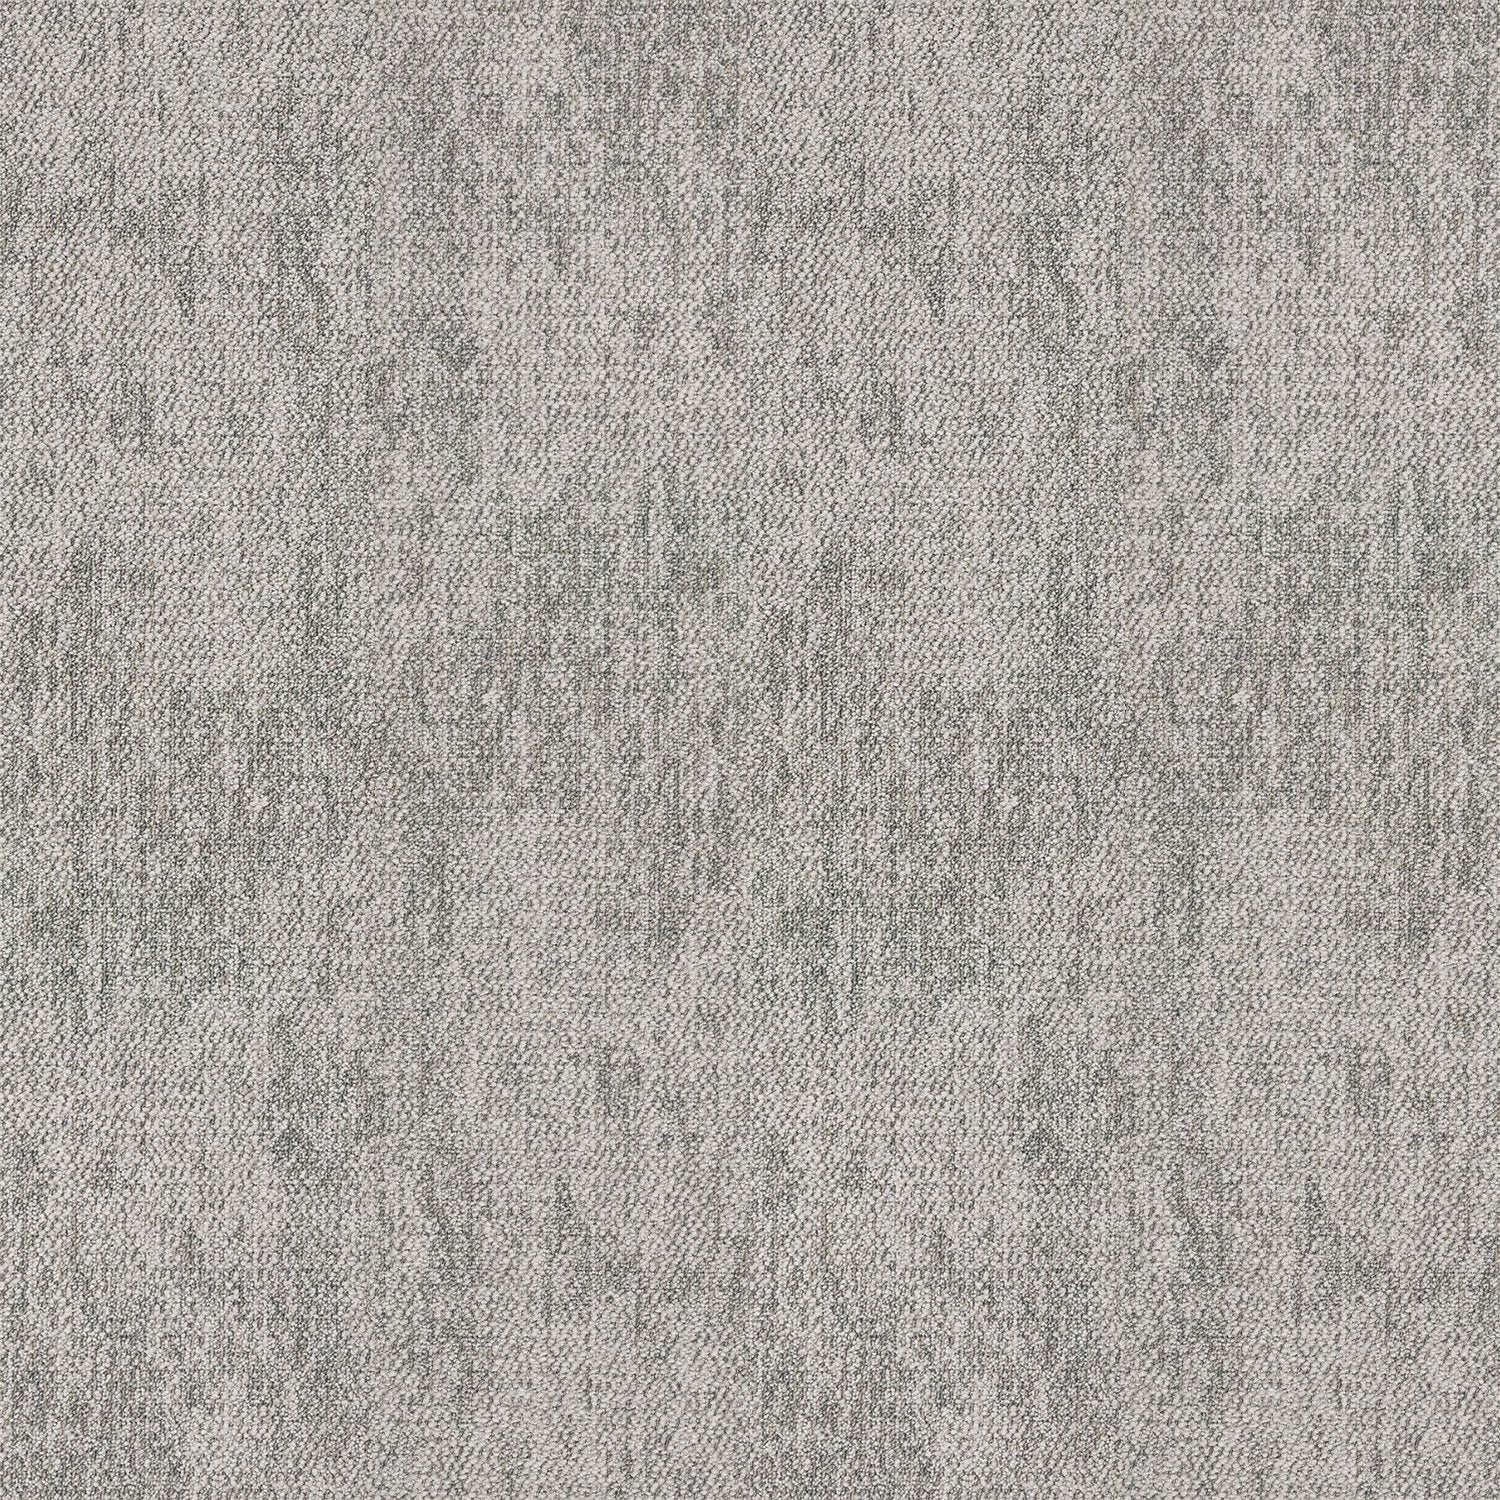 Mineral Carpet Tiles